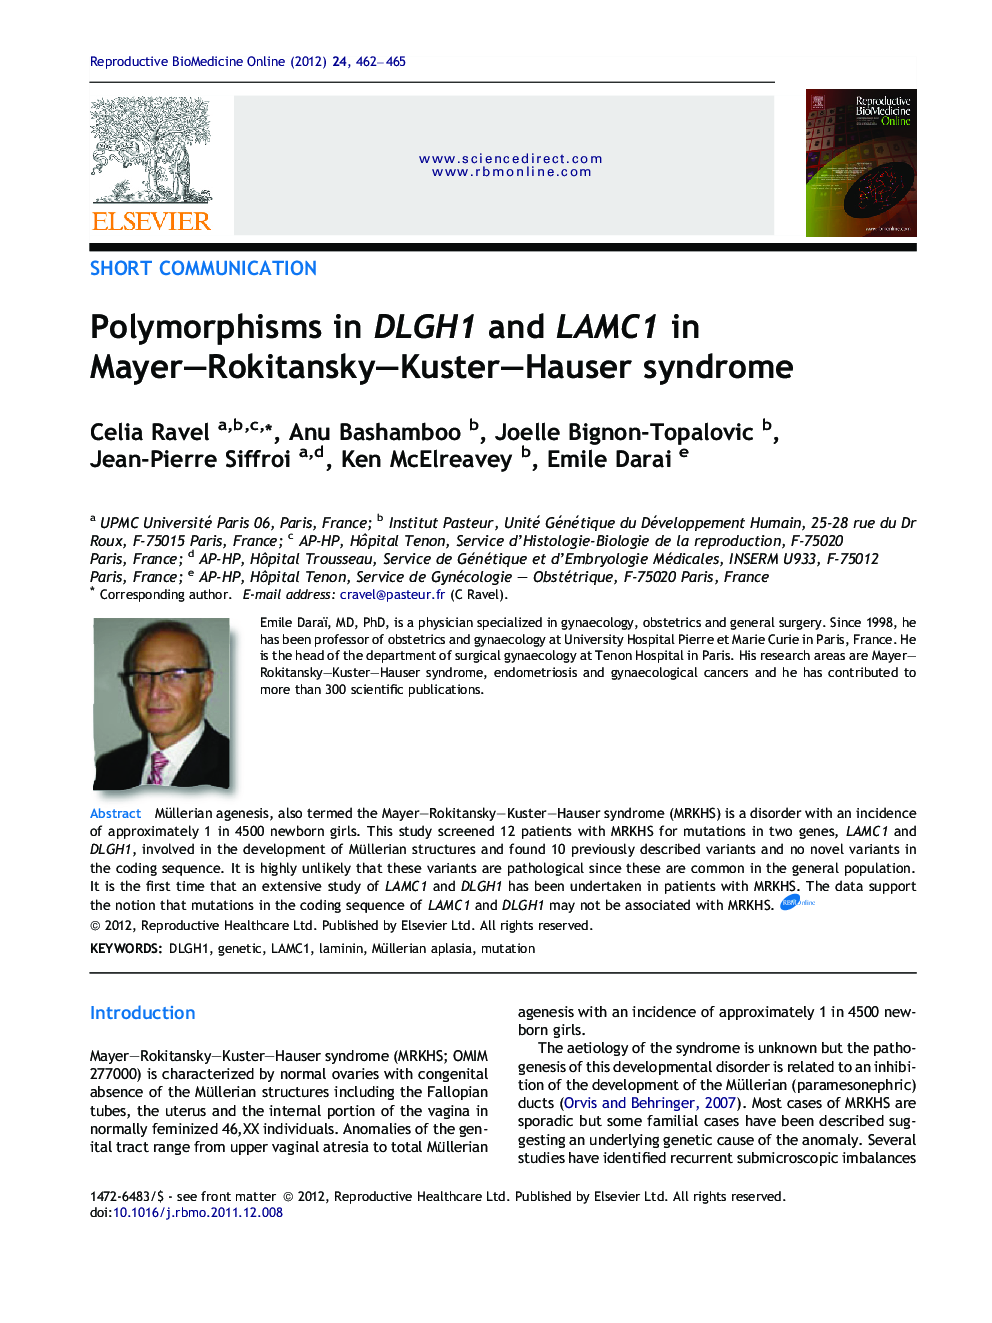 Polymorphisms in DLGH1 and LAMC1 in Mayer–Rokitansky–Kuster–Hauser syndrome 